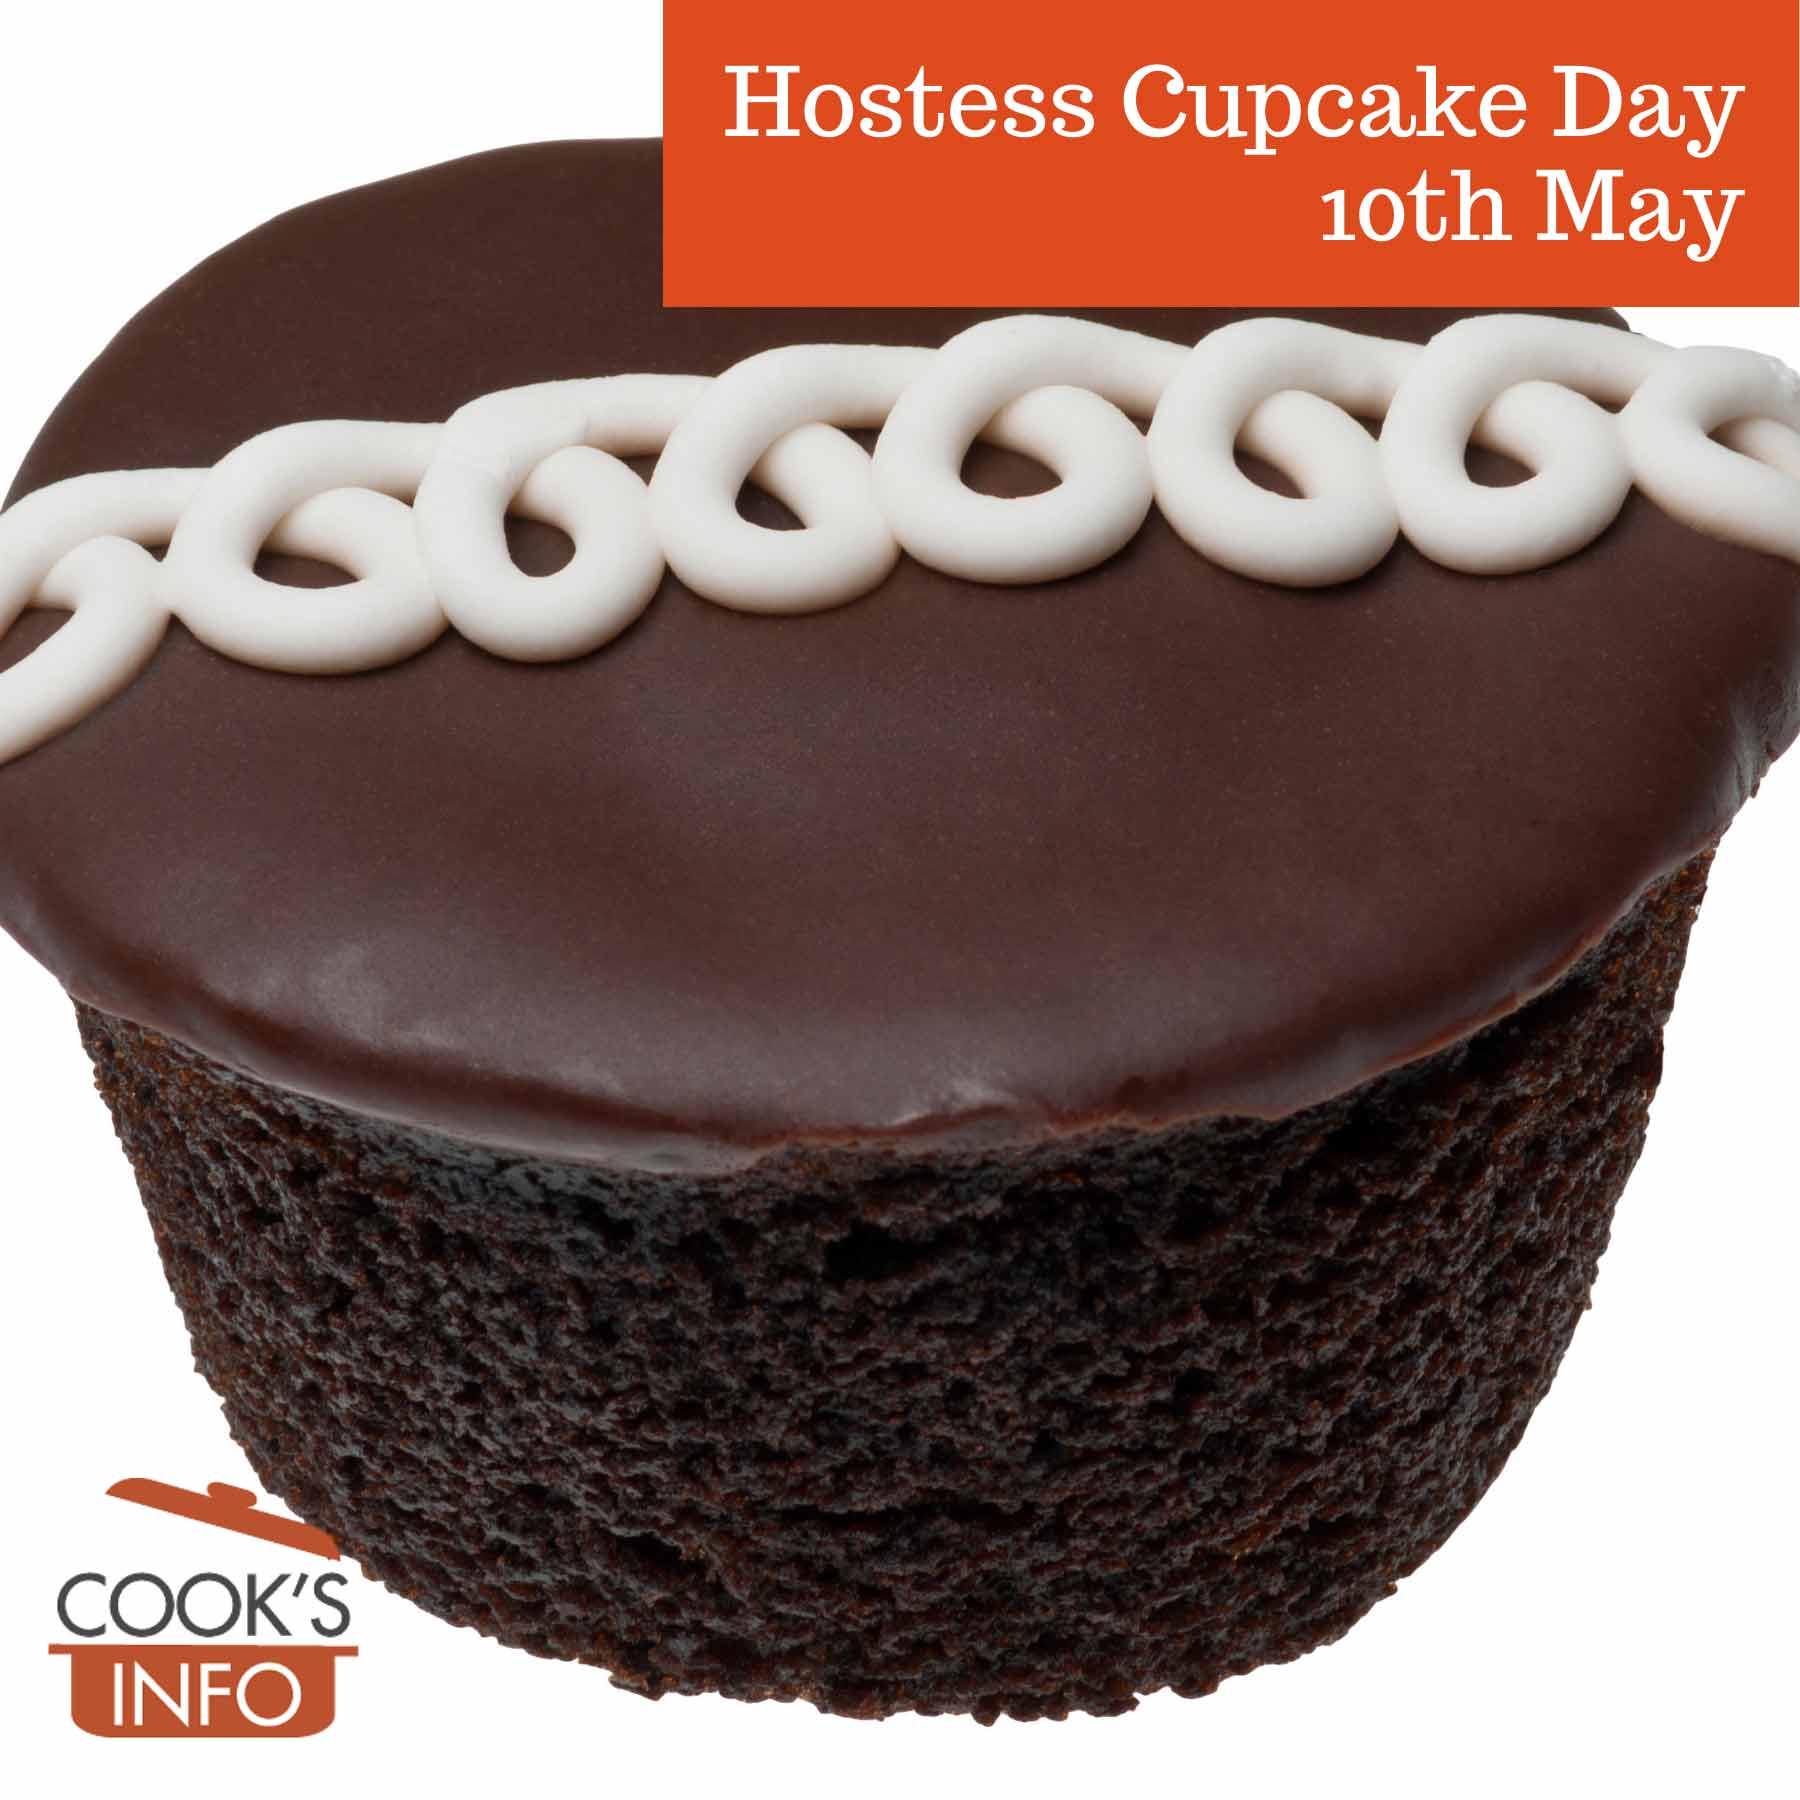 Hostess cupcake